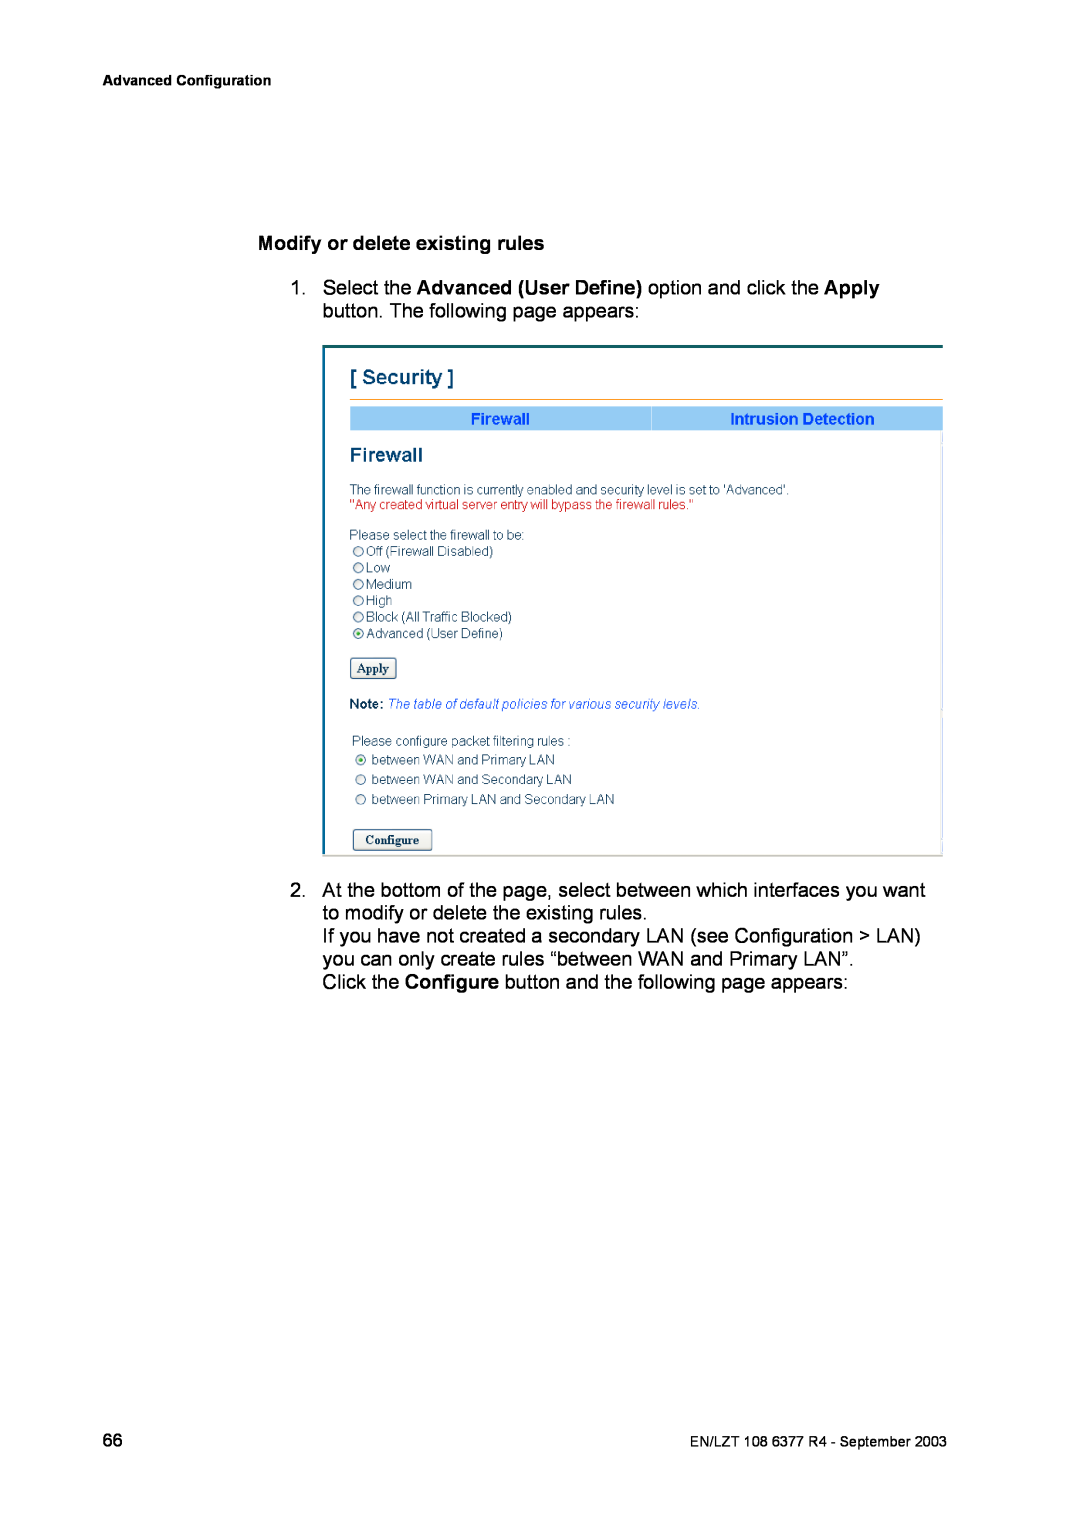 Garmin HN294DP/DI manual Modify or delete existing rules 